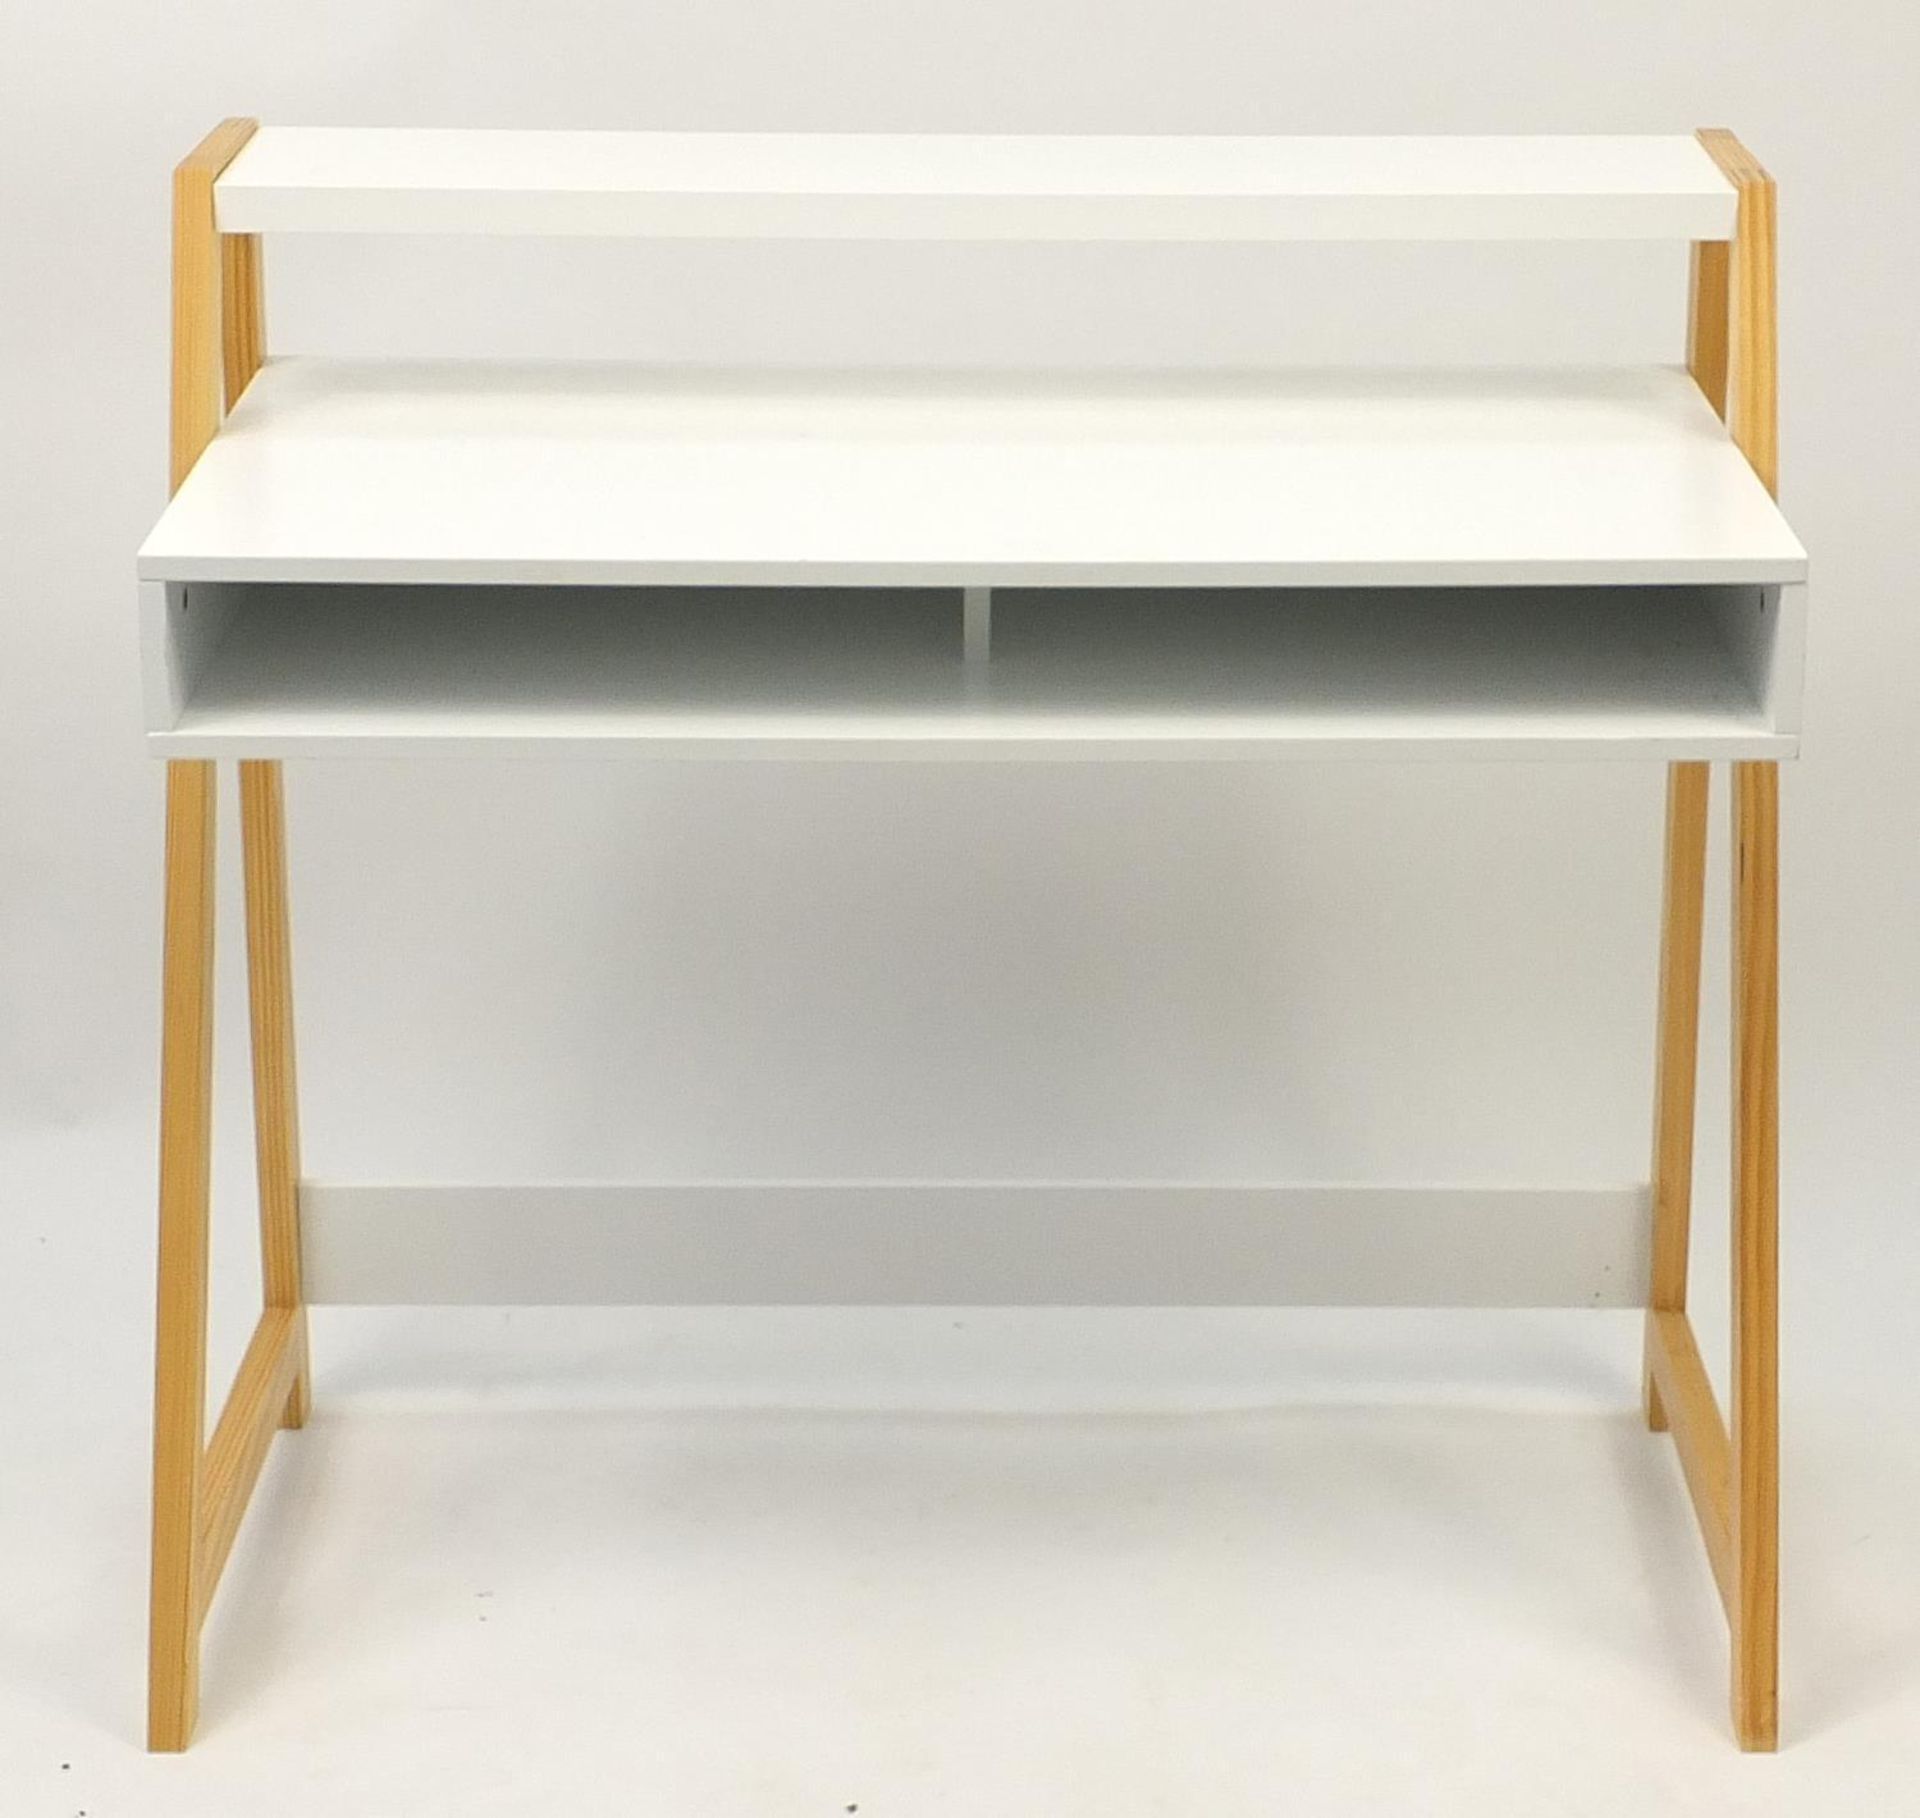 Contemporary light wood and melamine desk, 92.5cm H x 100cm W x 52cm D - Image 2 of 4